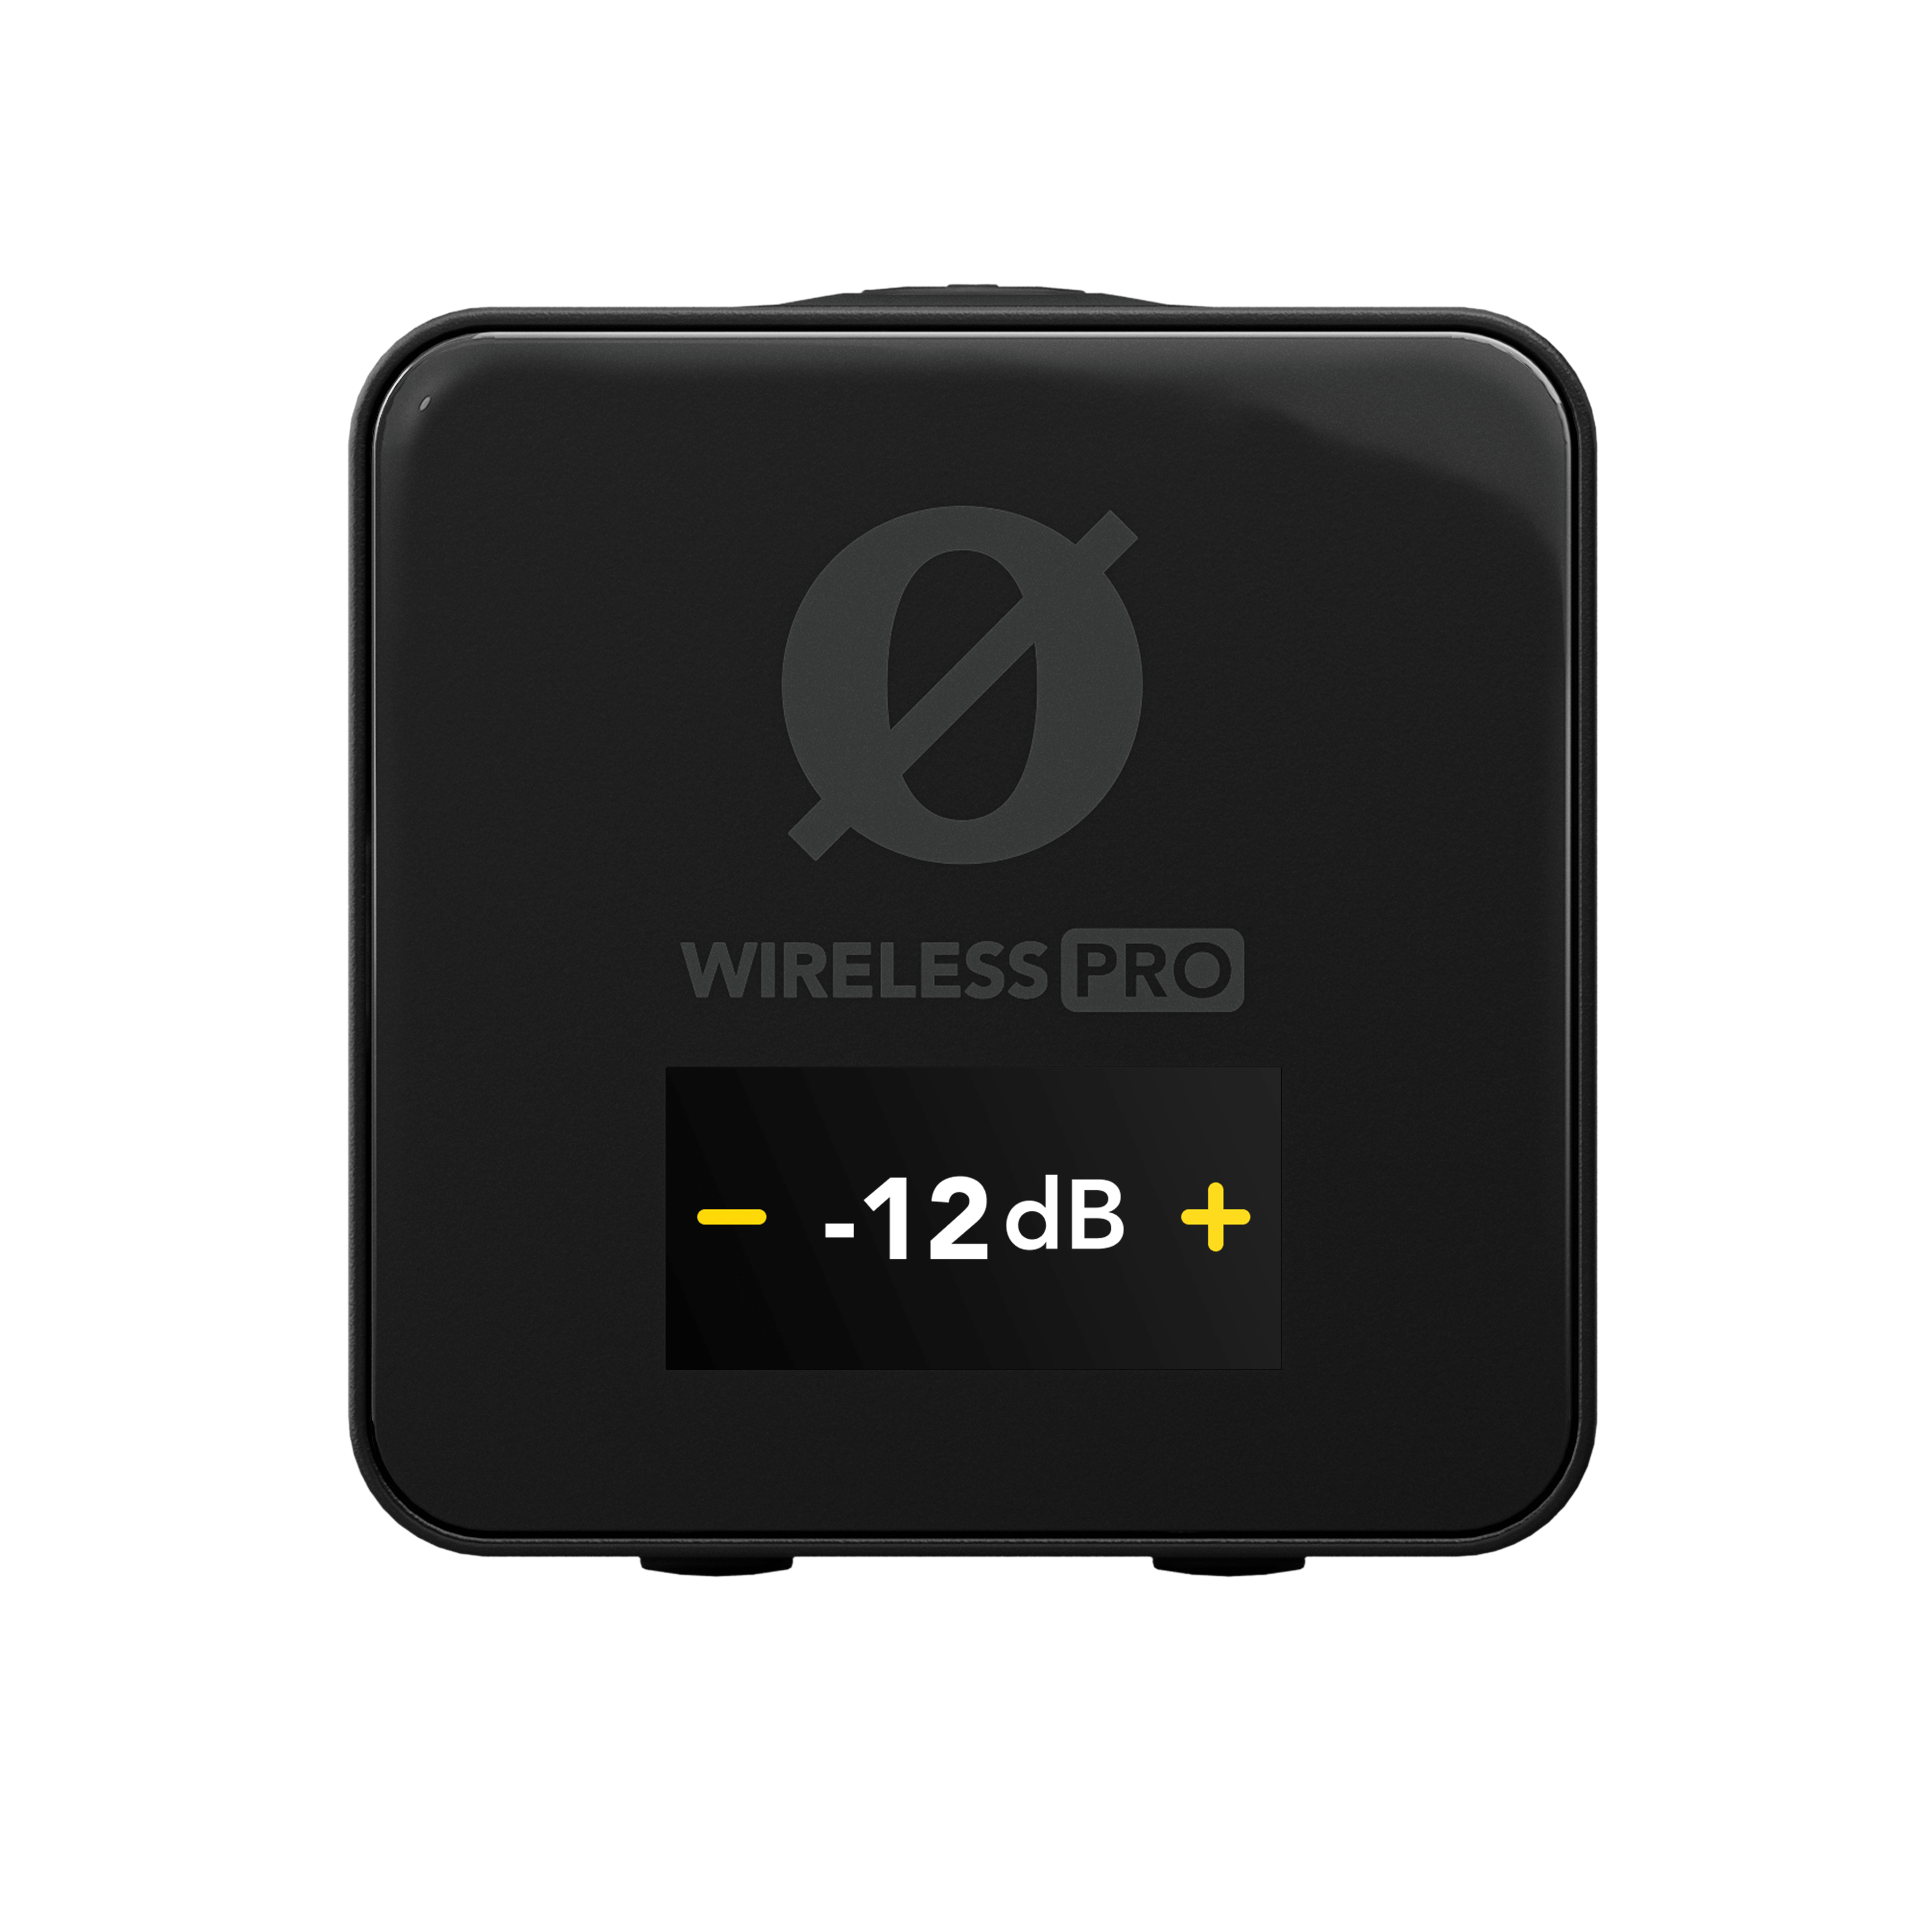 Wireless PRO output gain adjustment screen